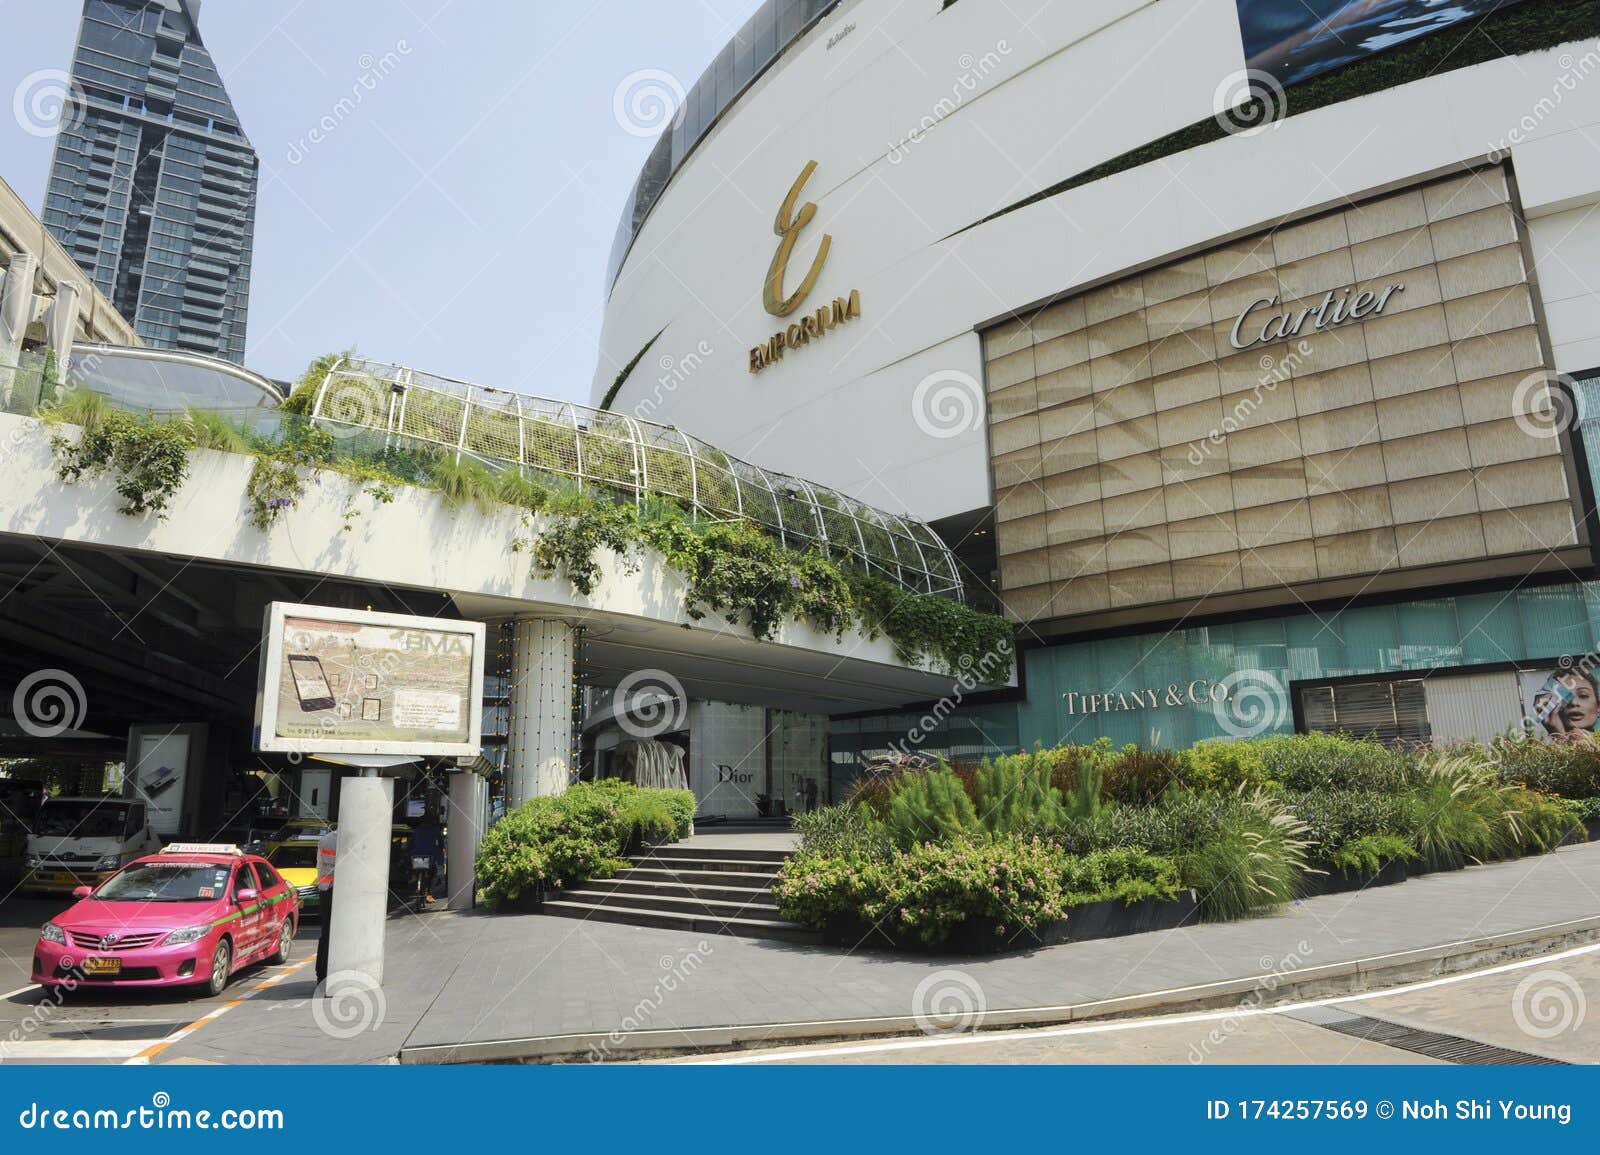 1,122 Emporium Bangkok Images, Stock Photos, 3D objects, & Vectors